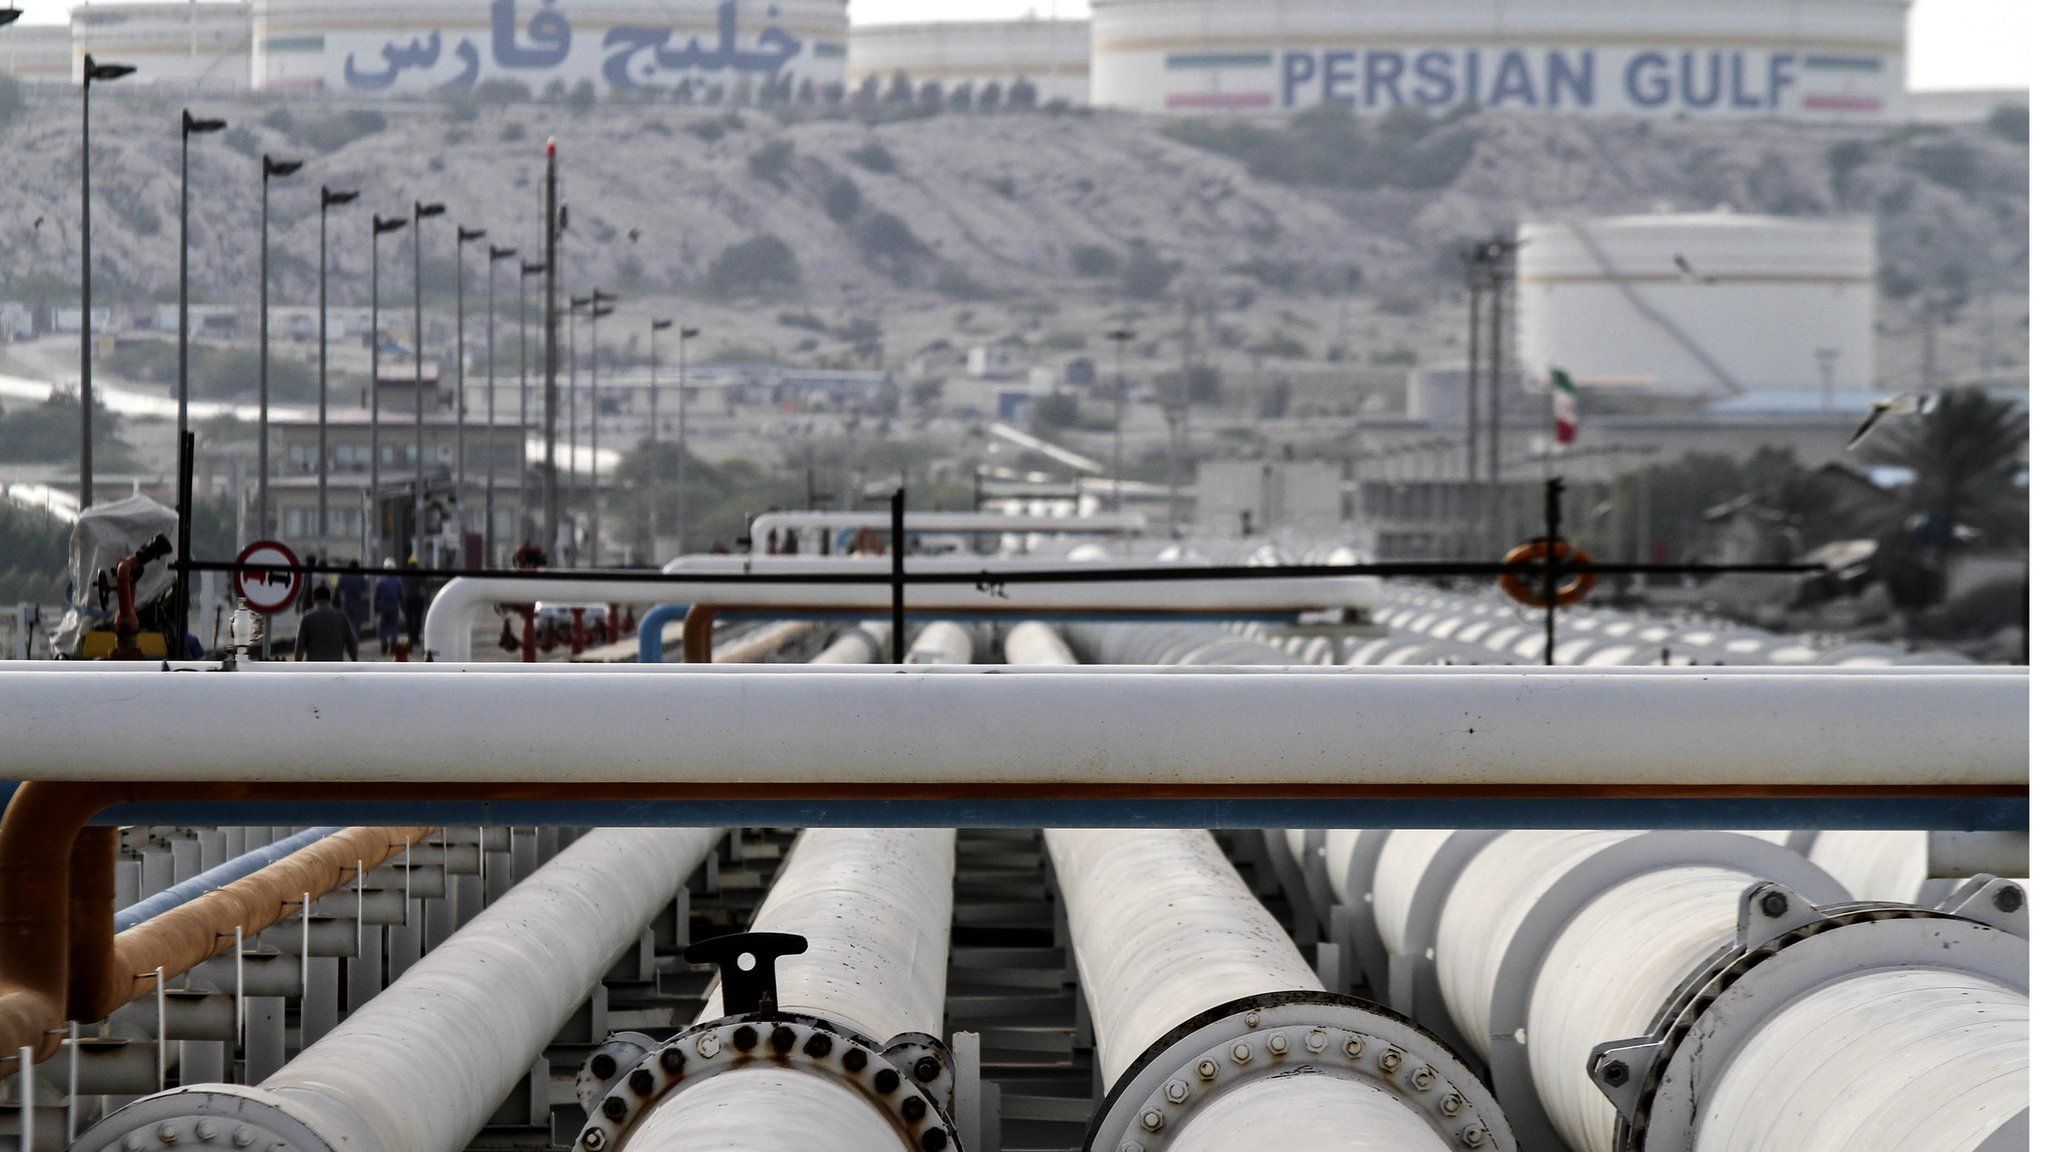 Oil pipelines in Iran